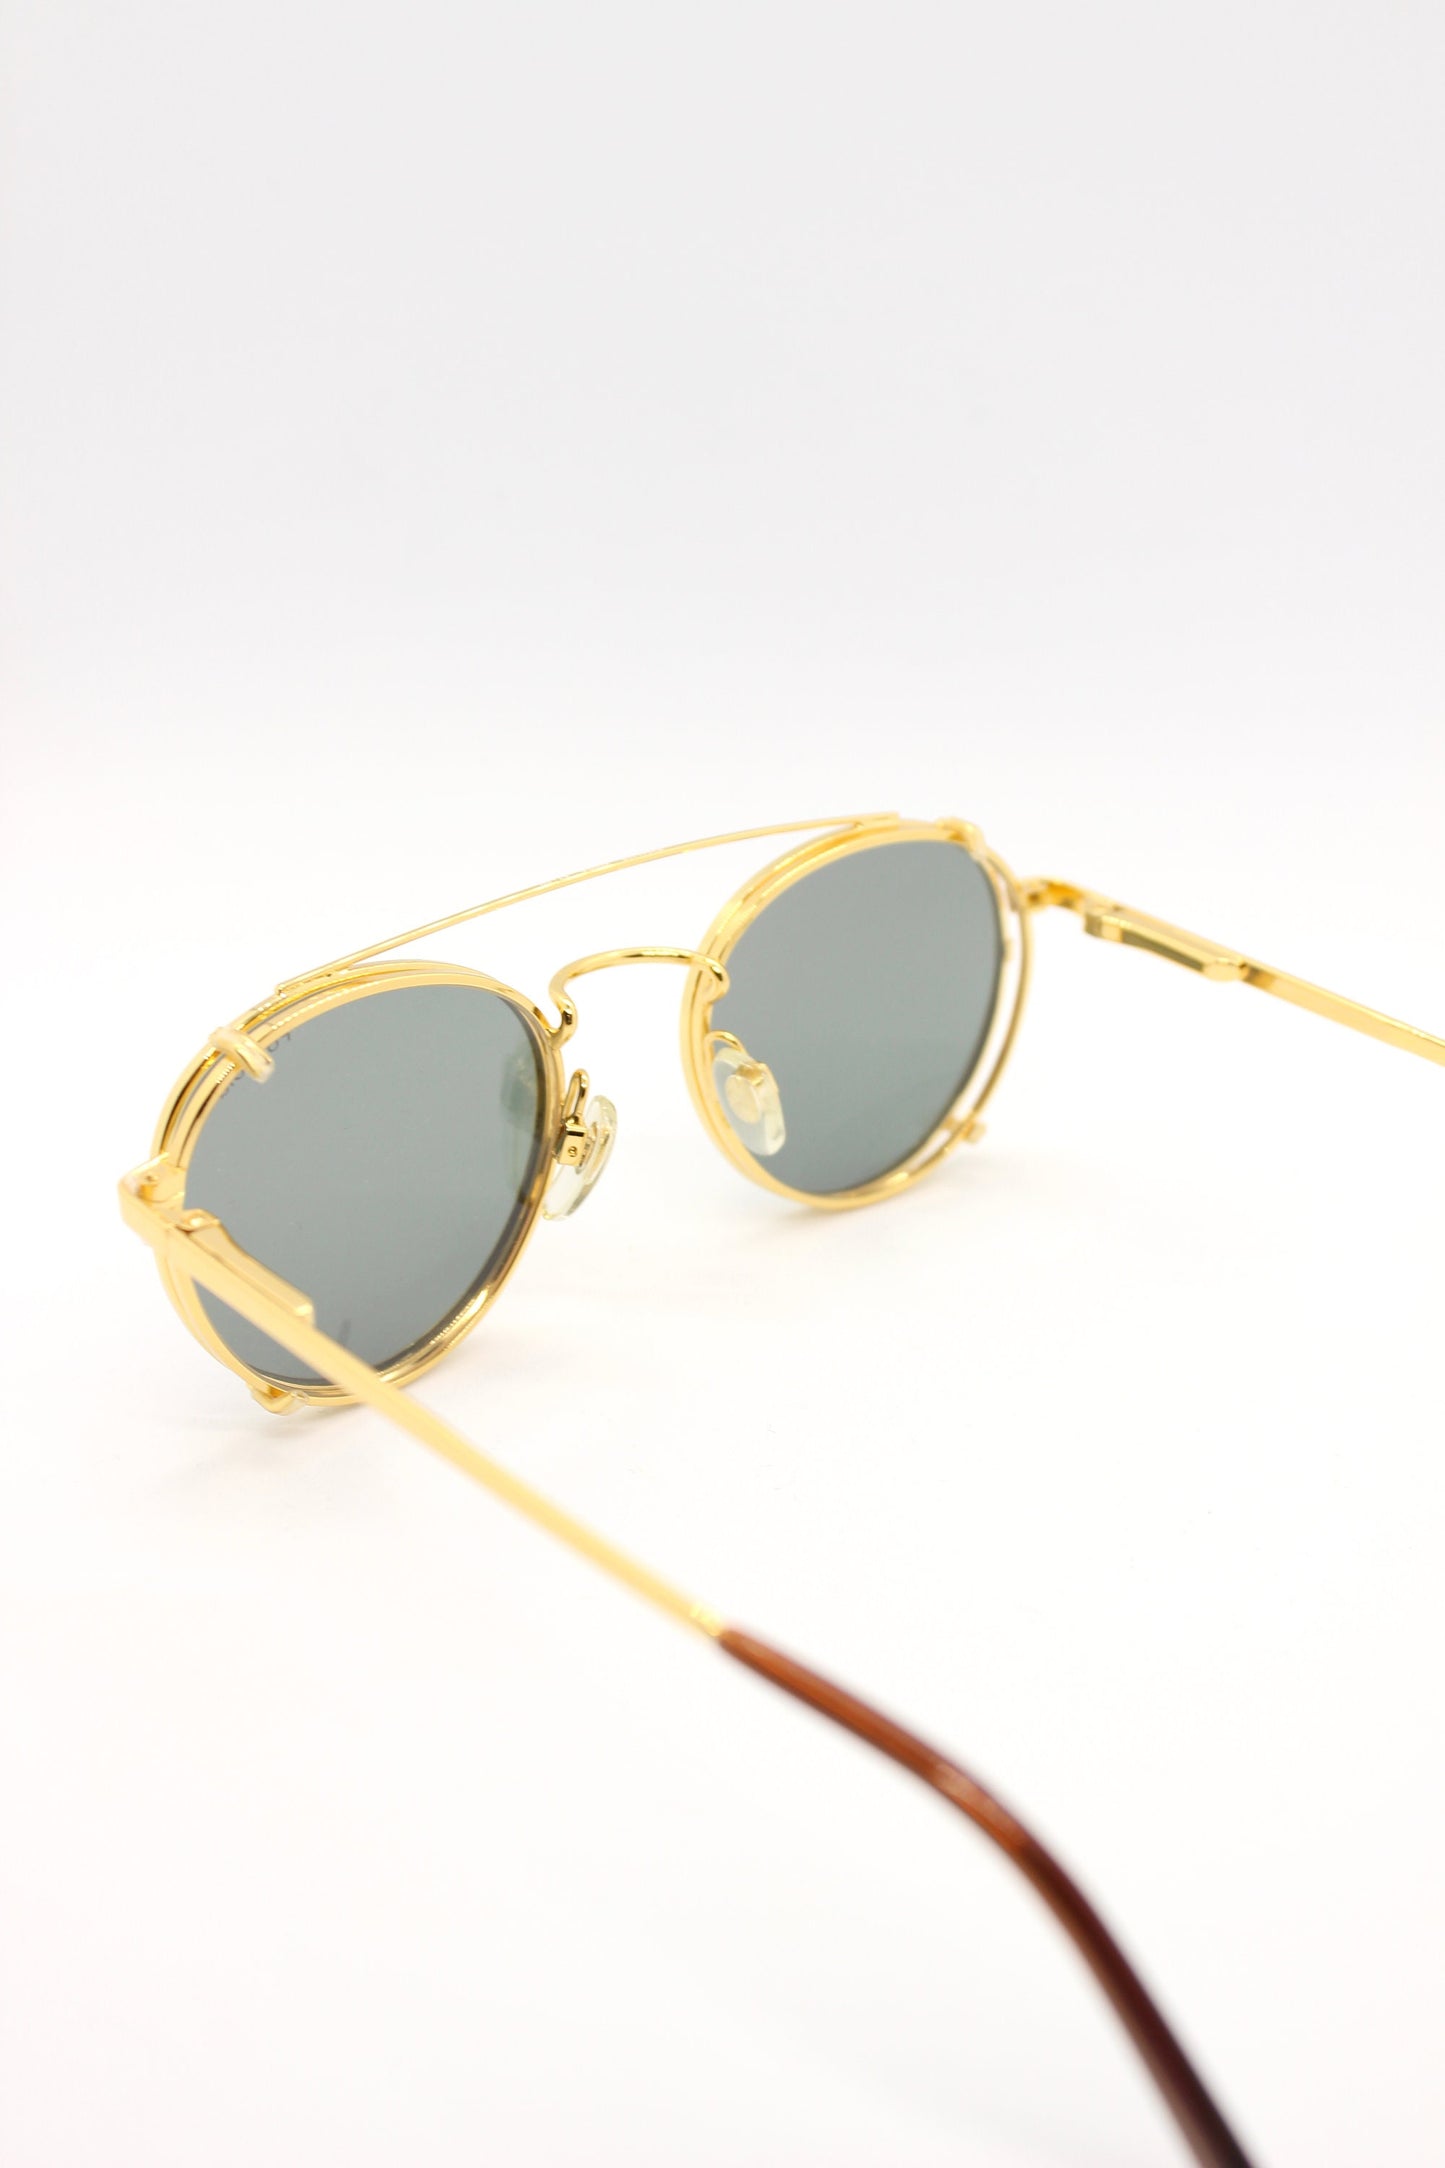 POLAROID flip up Vintage New Old Stock sunglasses. Never worn